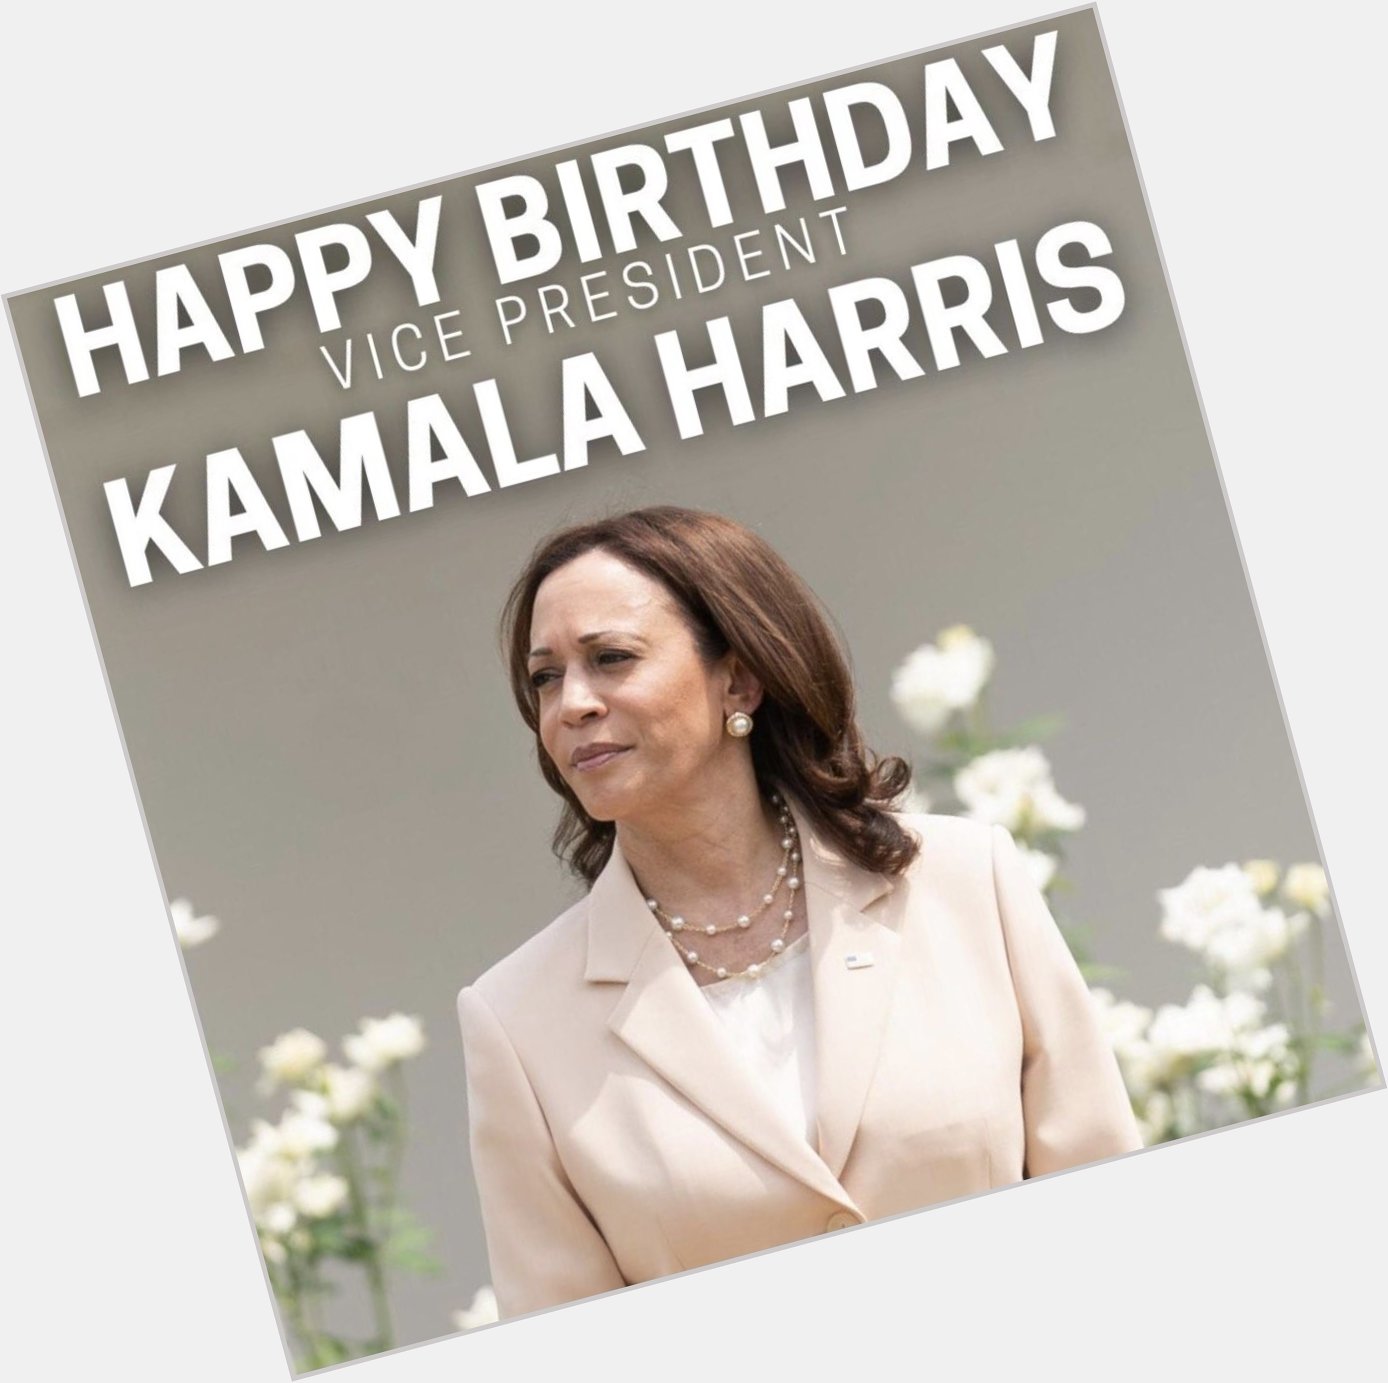 HAPPY BIRTHDAY MADAM VICE PRESIDENT KAMALA HARRIS    